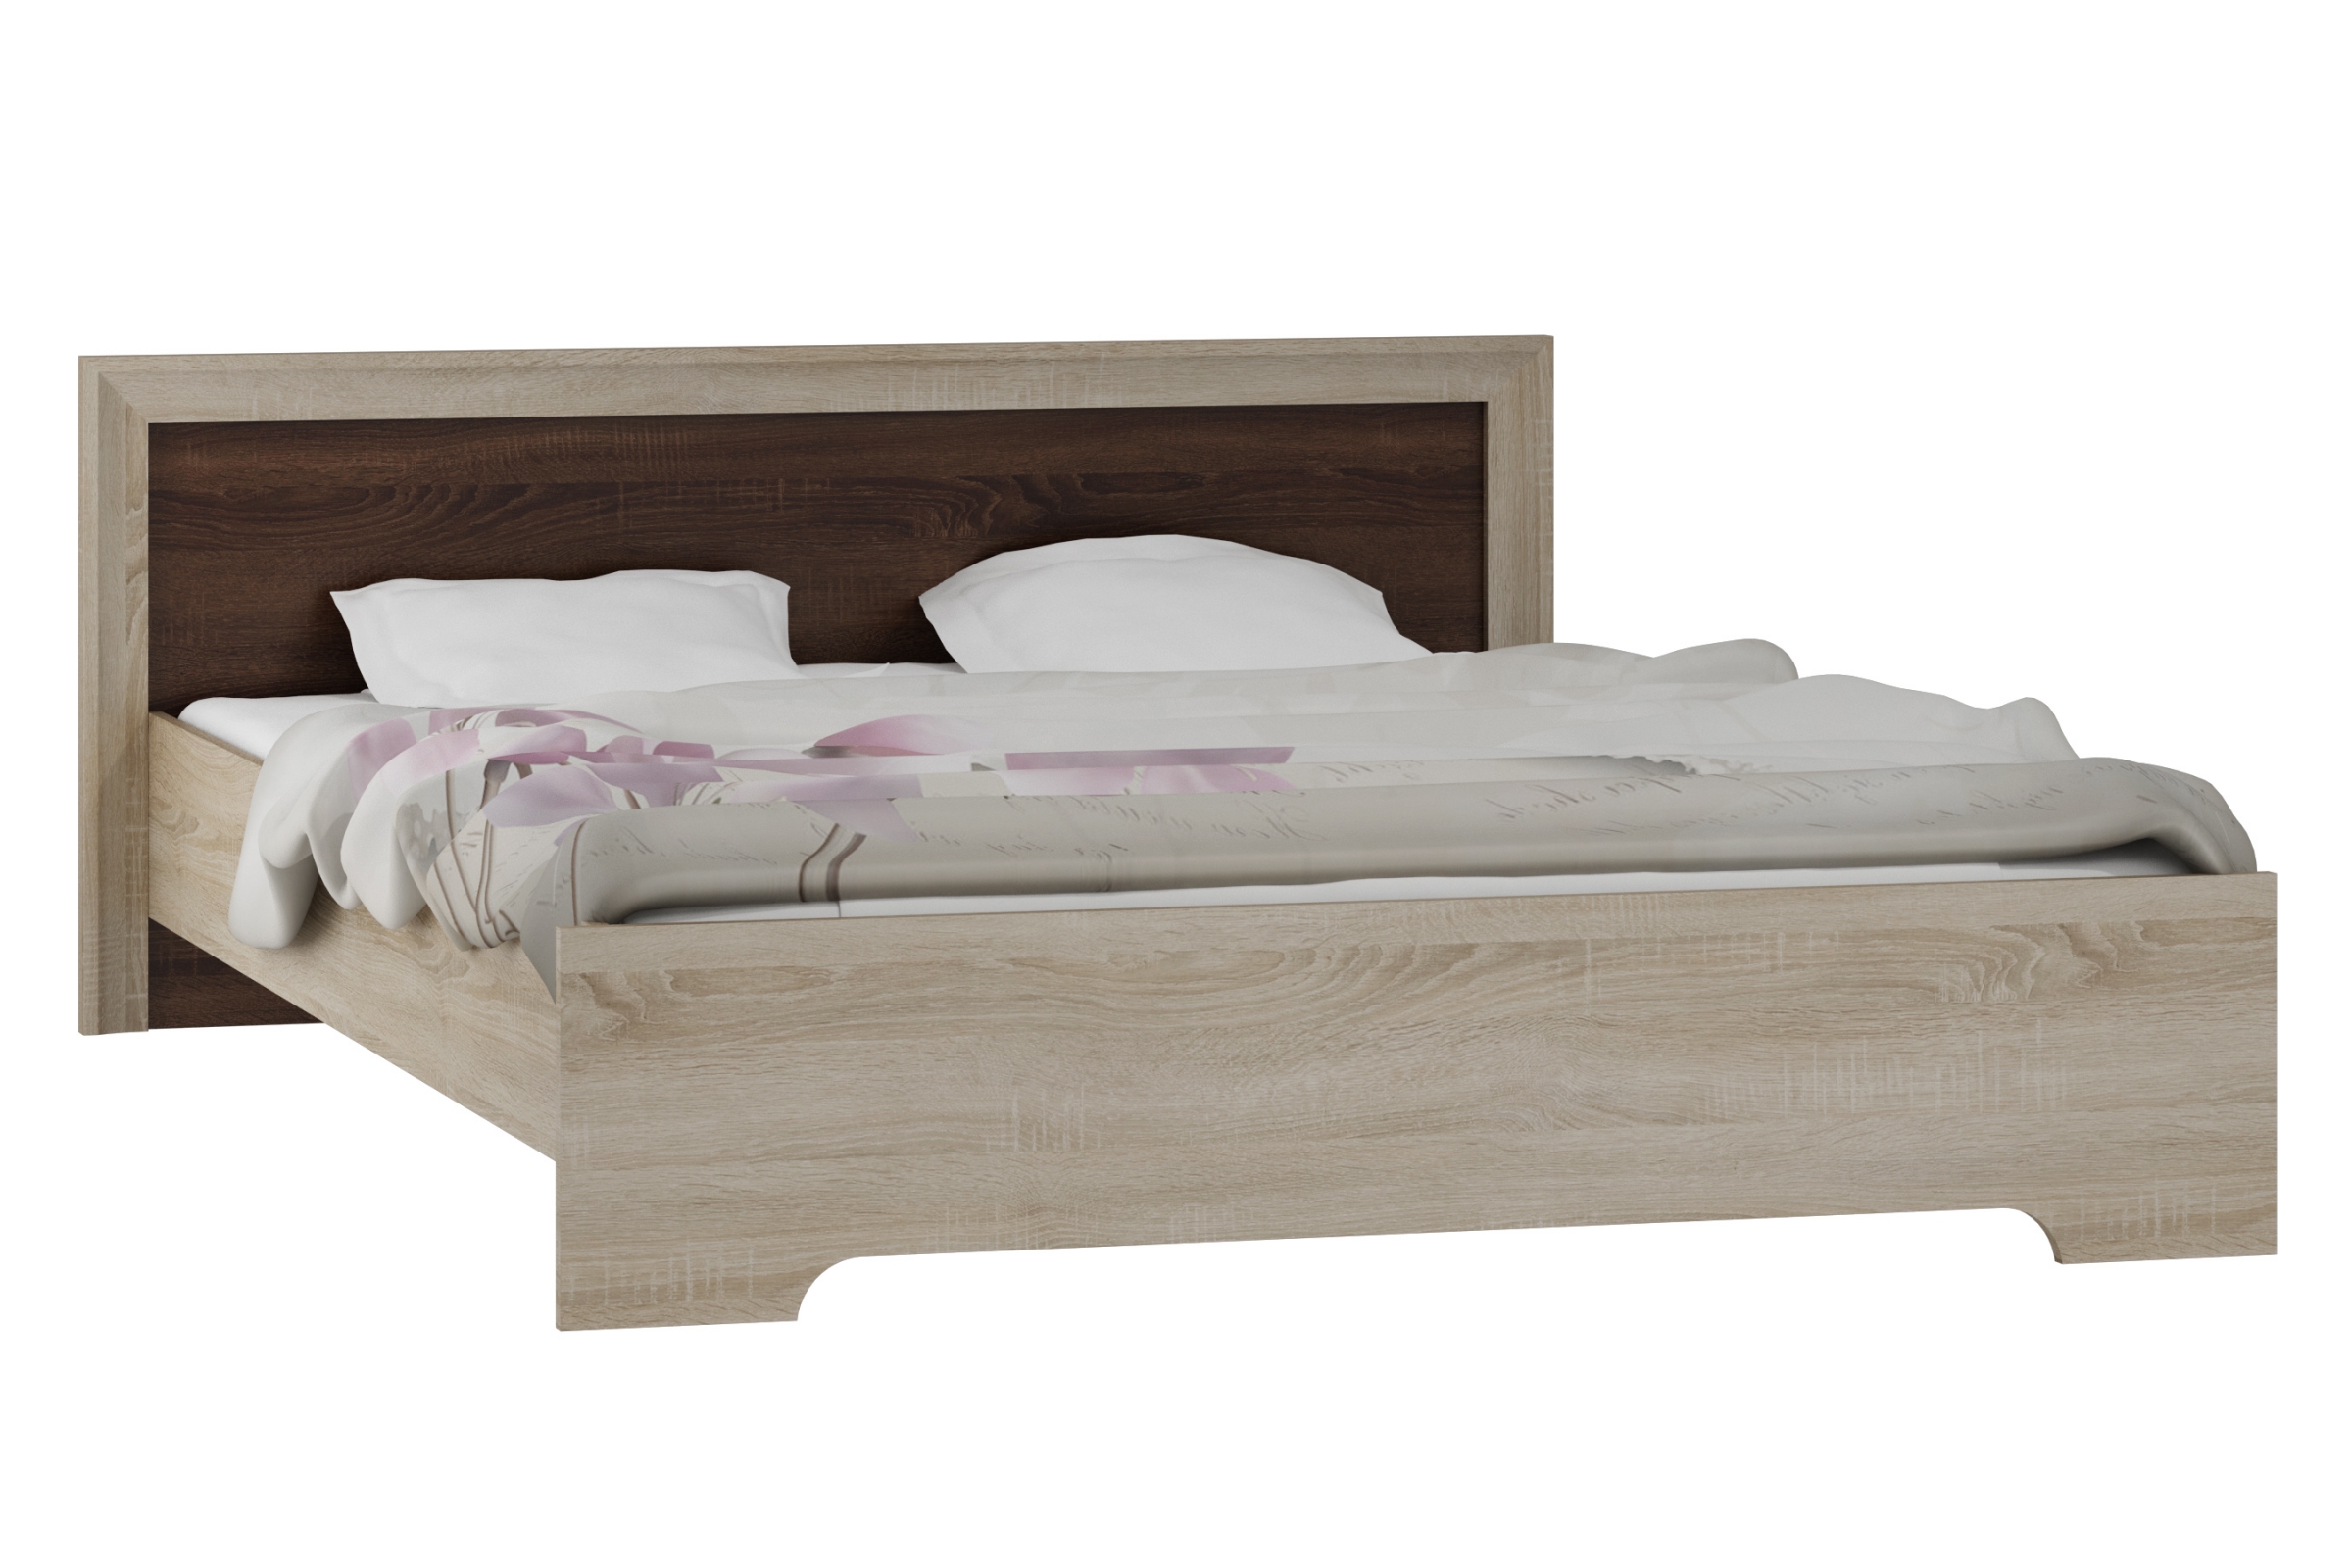 Postel SA-Postel 120 - systém Santori postel do ložnice Santori - 120x200 cm